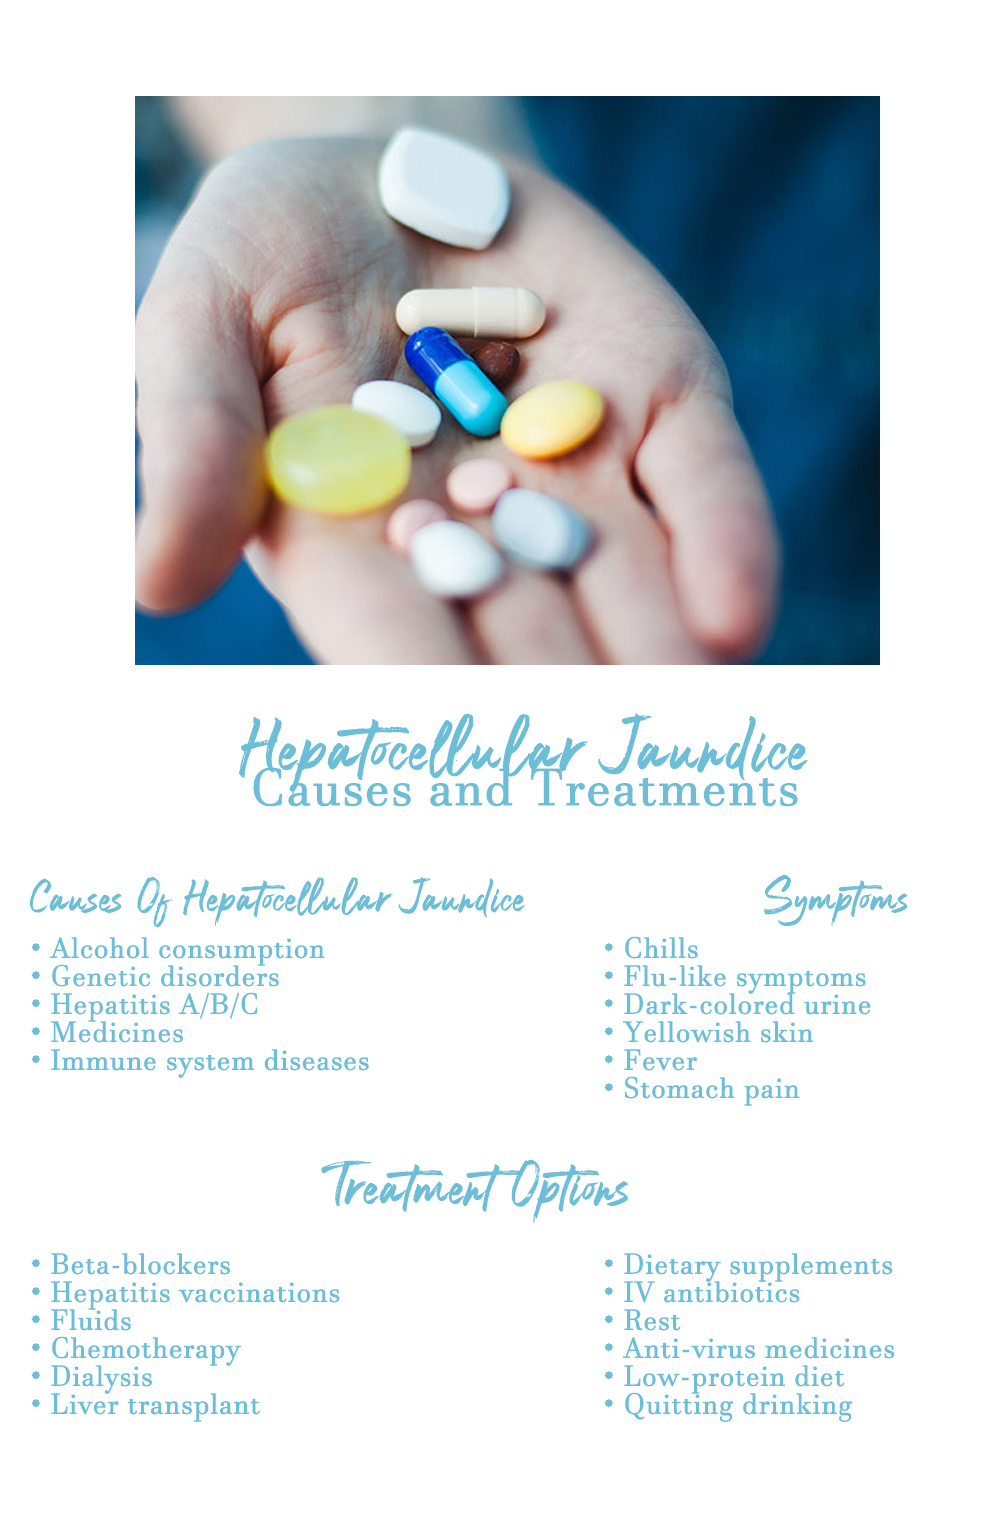 Hepatocellular Jaundice: Causes and Treatments